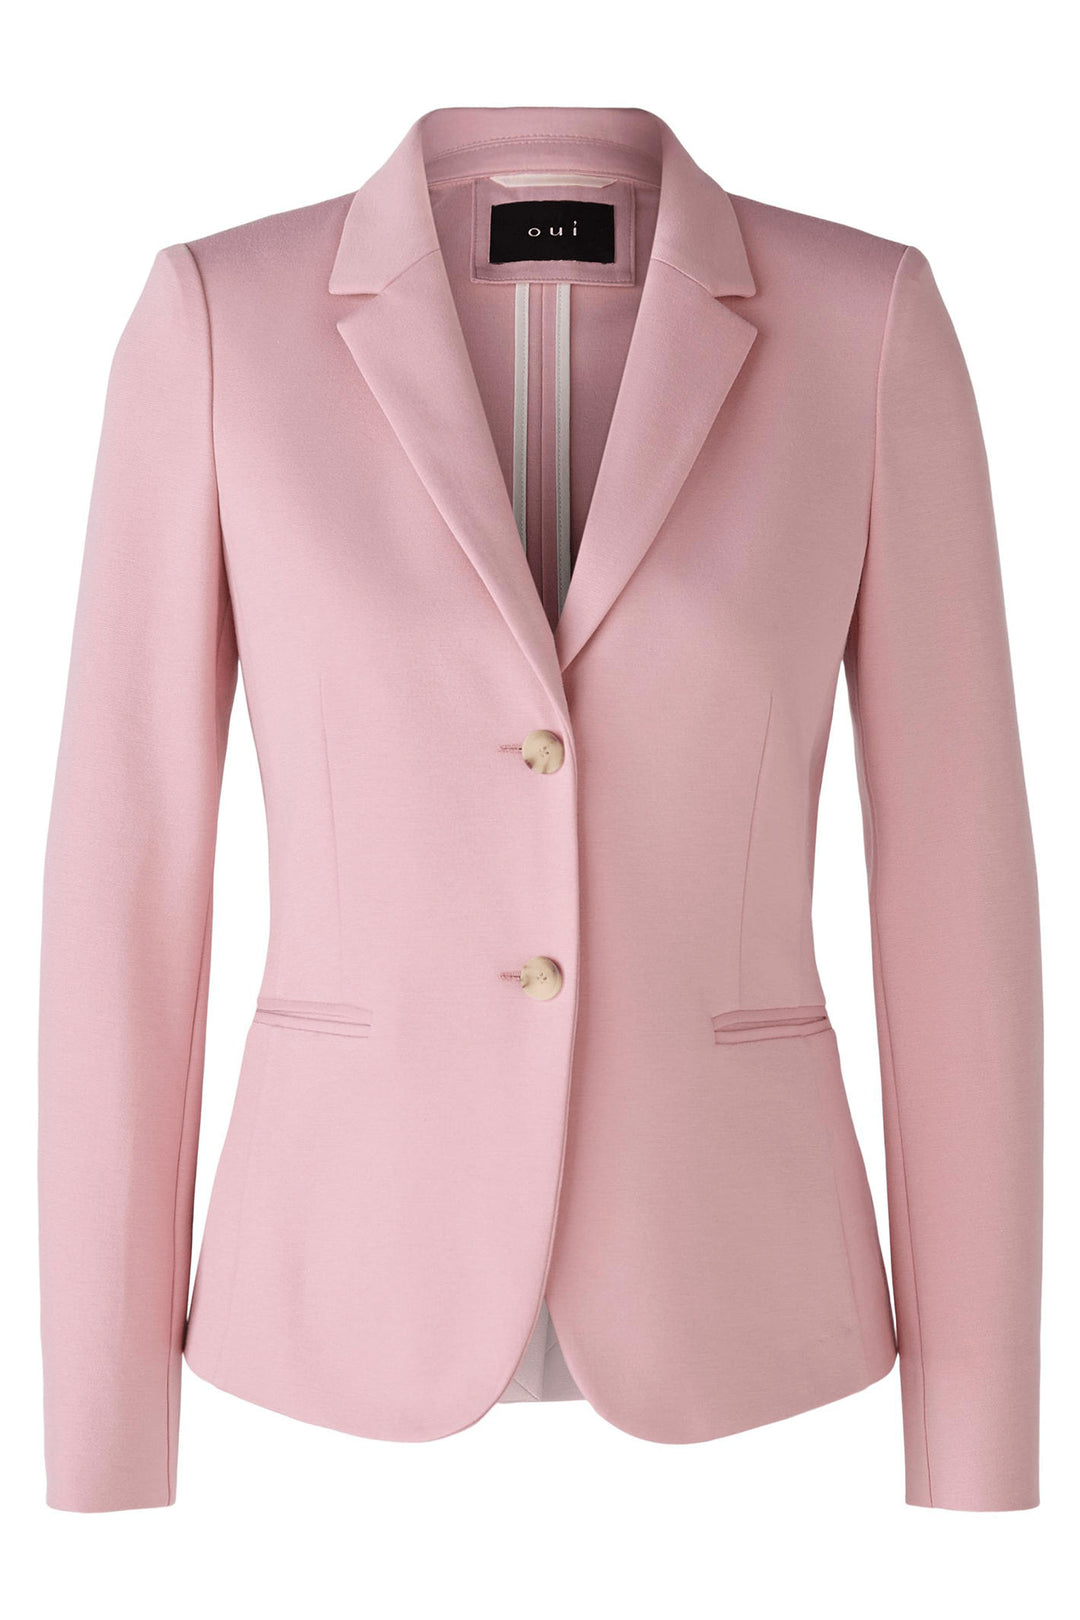 Oui 79237 Rose Pink Two Button Blazer Jacket - Olivia Grace Fashion